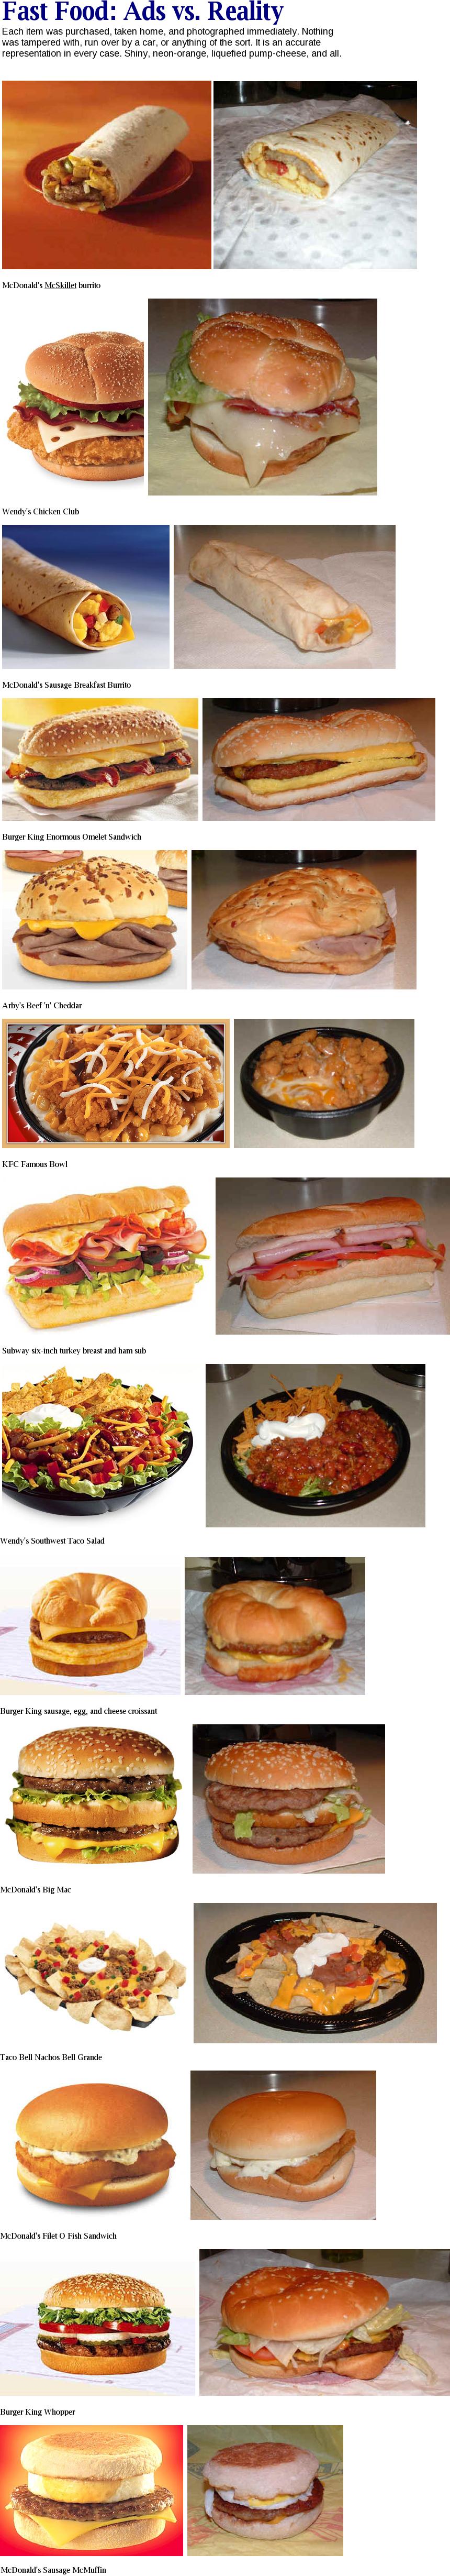 fast-food-ads-vs-reality